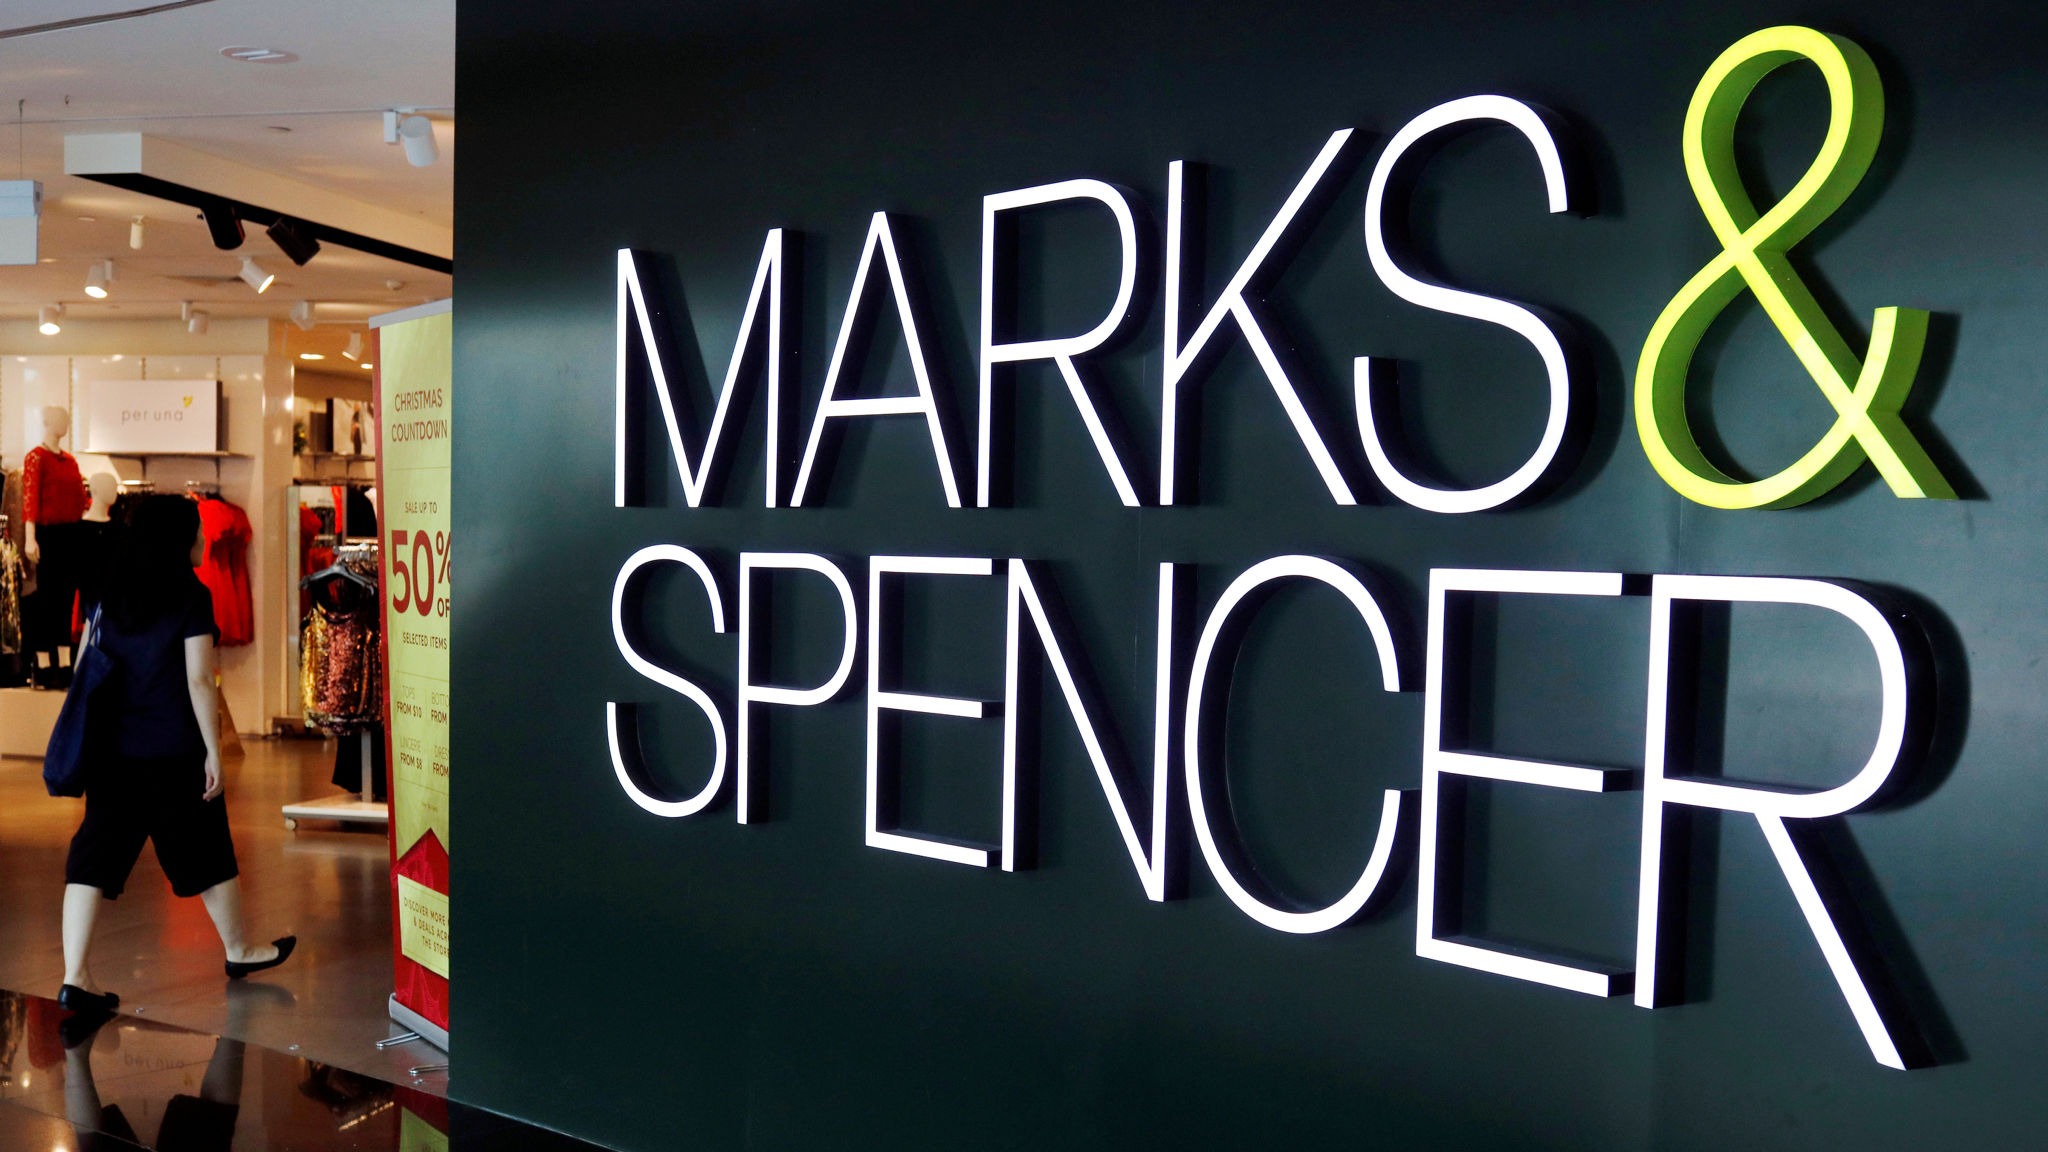 Kerugian pertama Marks & Spencer selepas 94 tahun | DagangNews